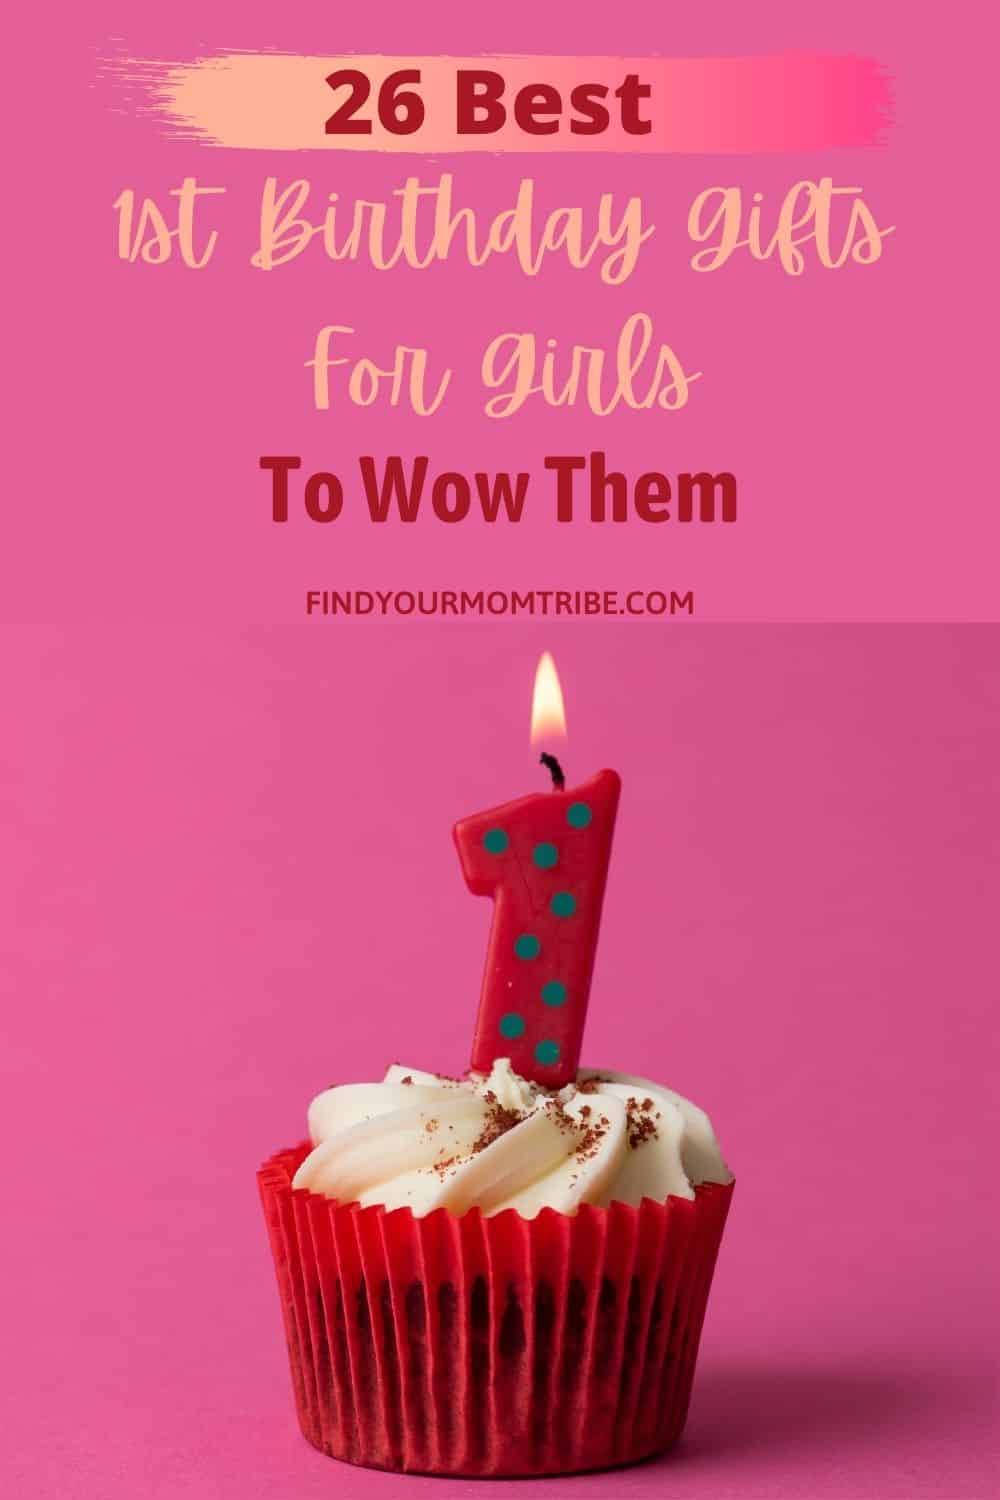 Pinterest birthday gifts for girls